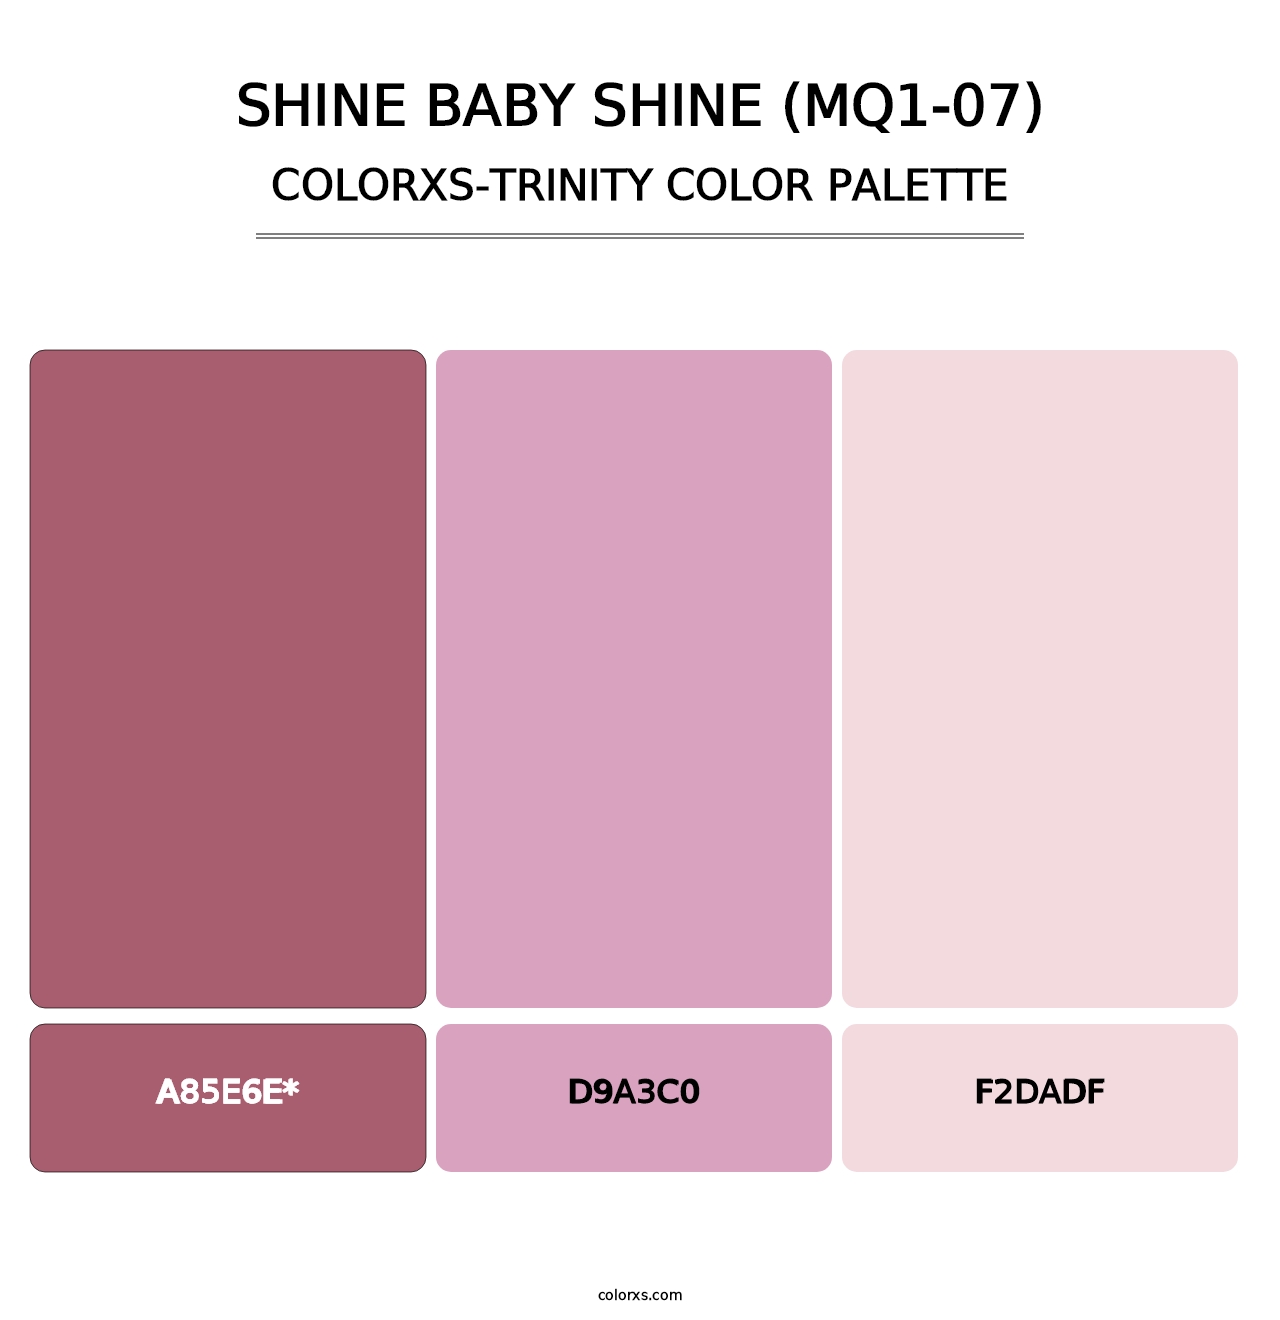 Shine Baby Shine (MQ1-07) - Colorxs Trinity Palette